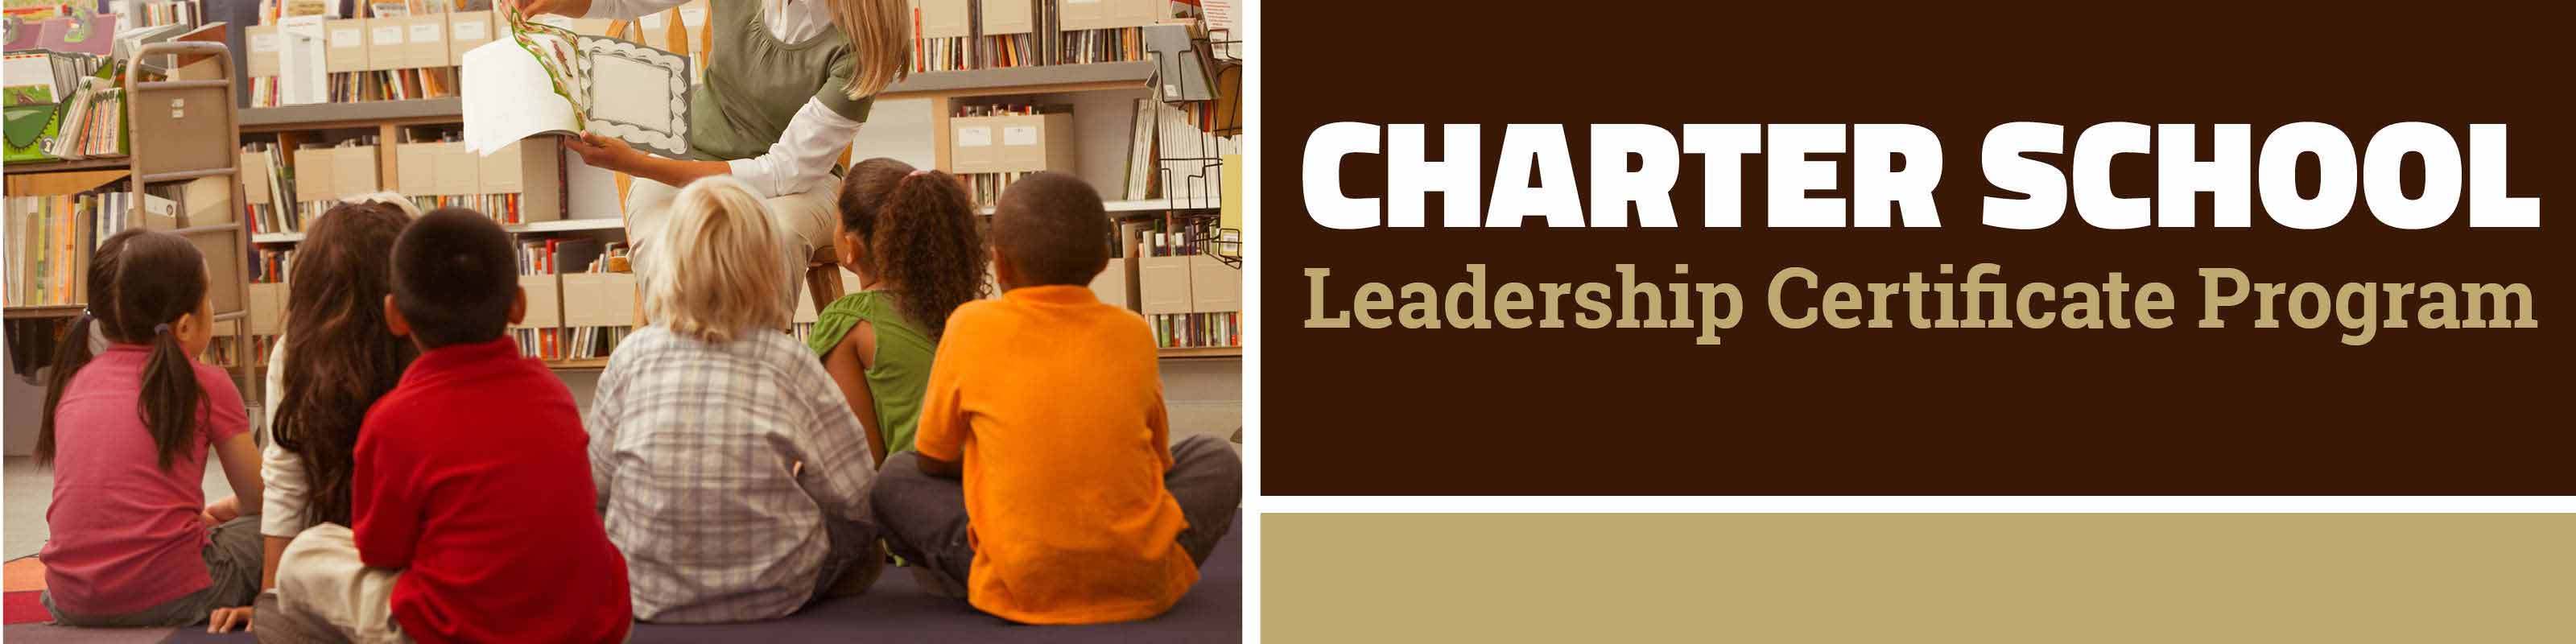 Charter School Leadership Certificate Program